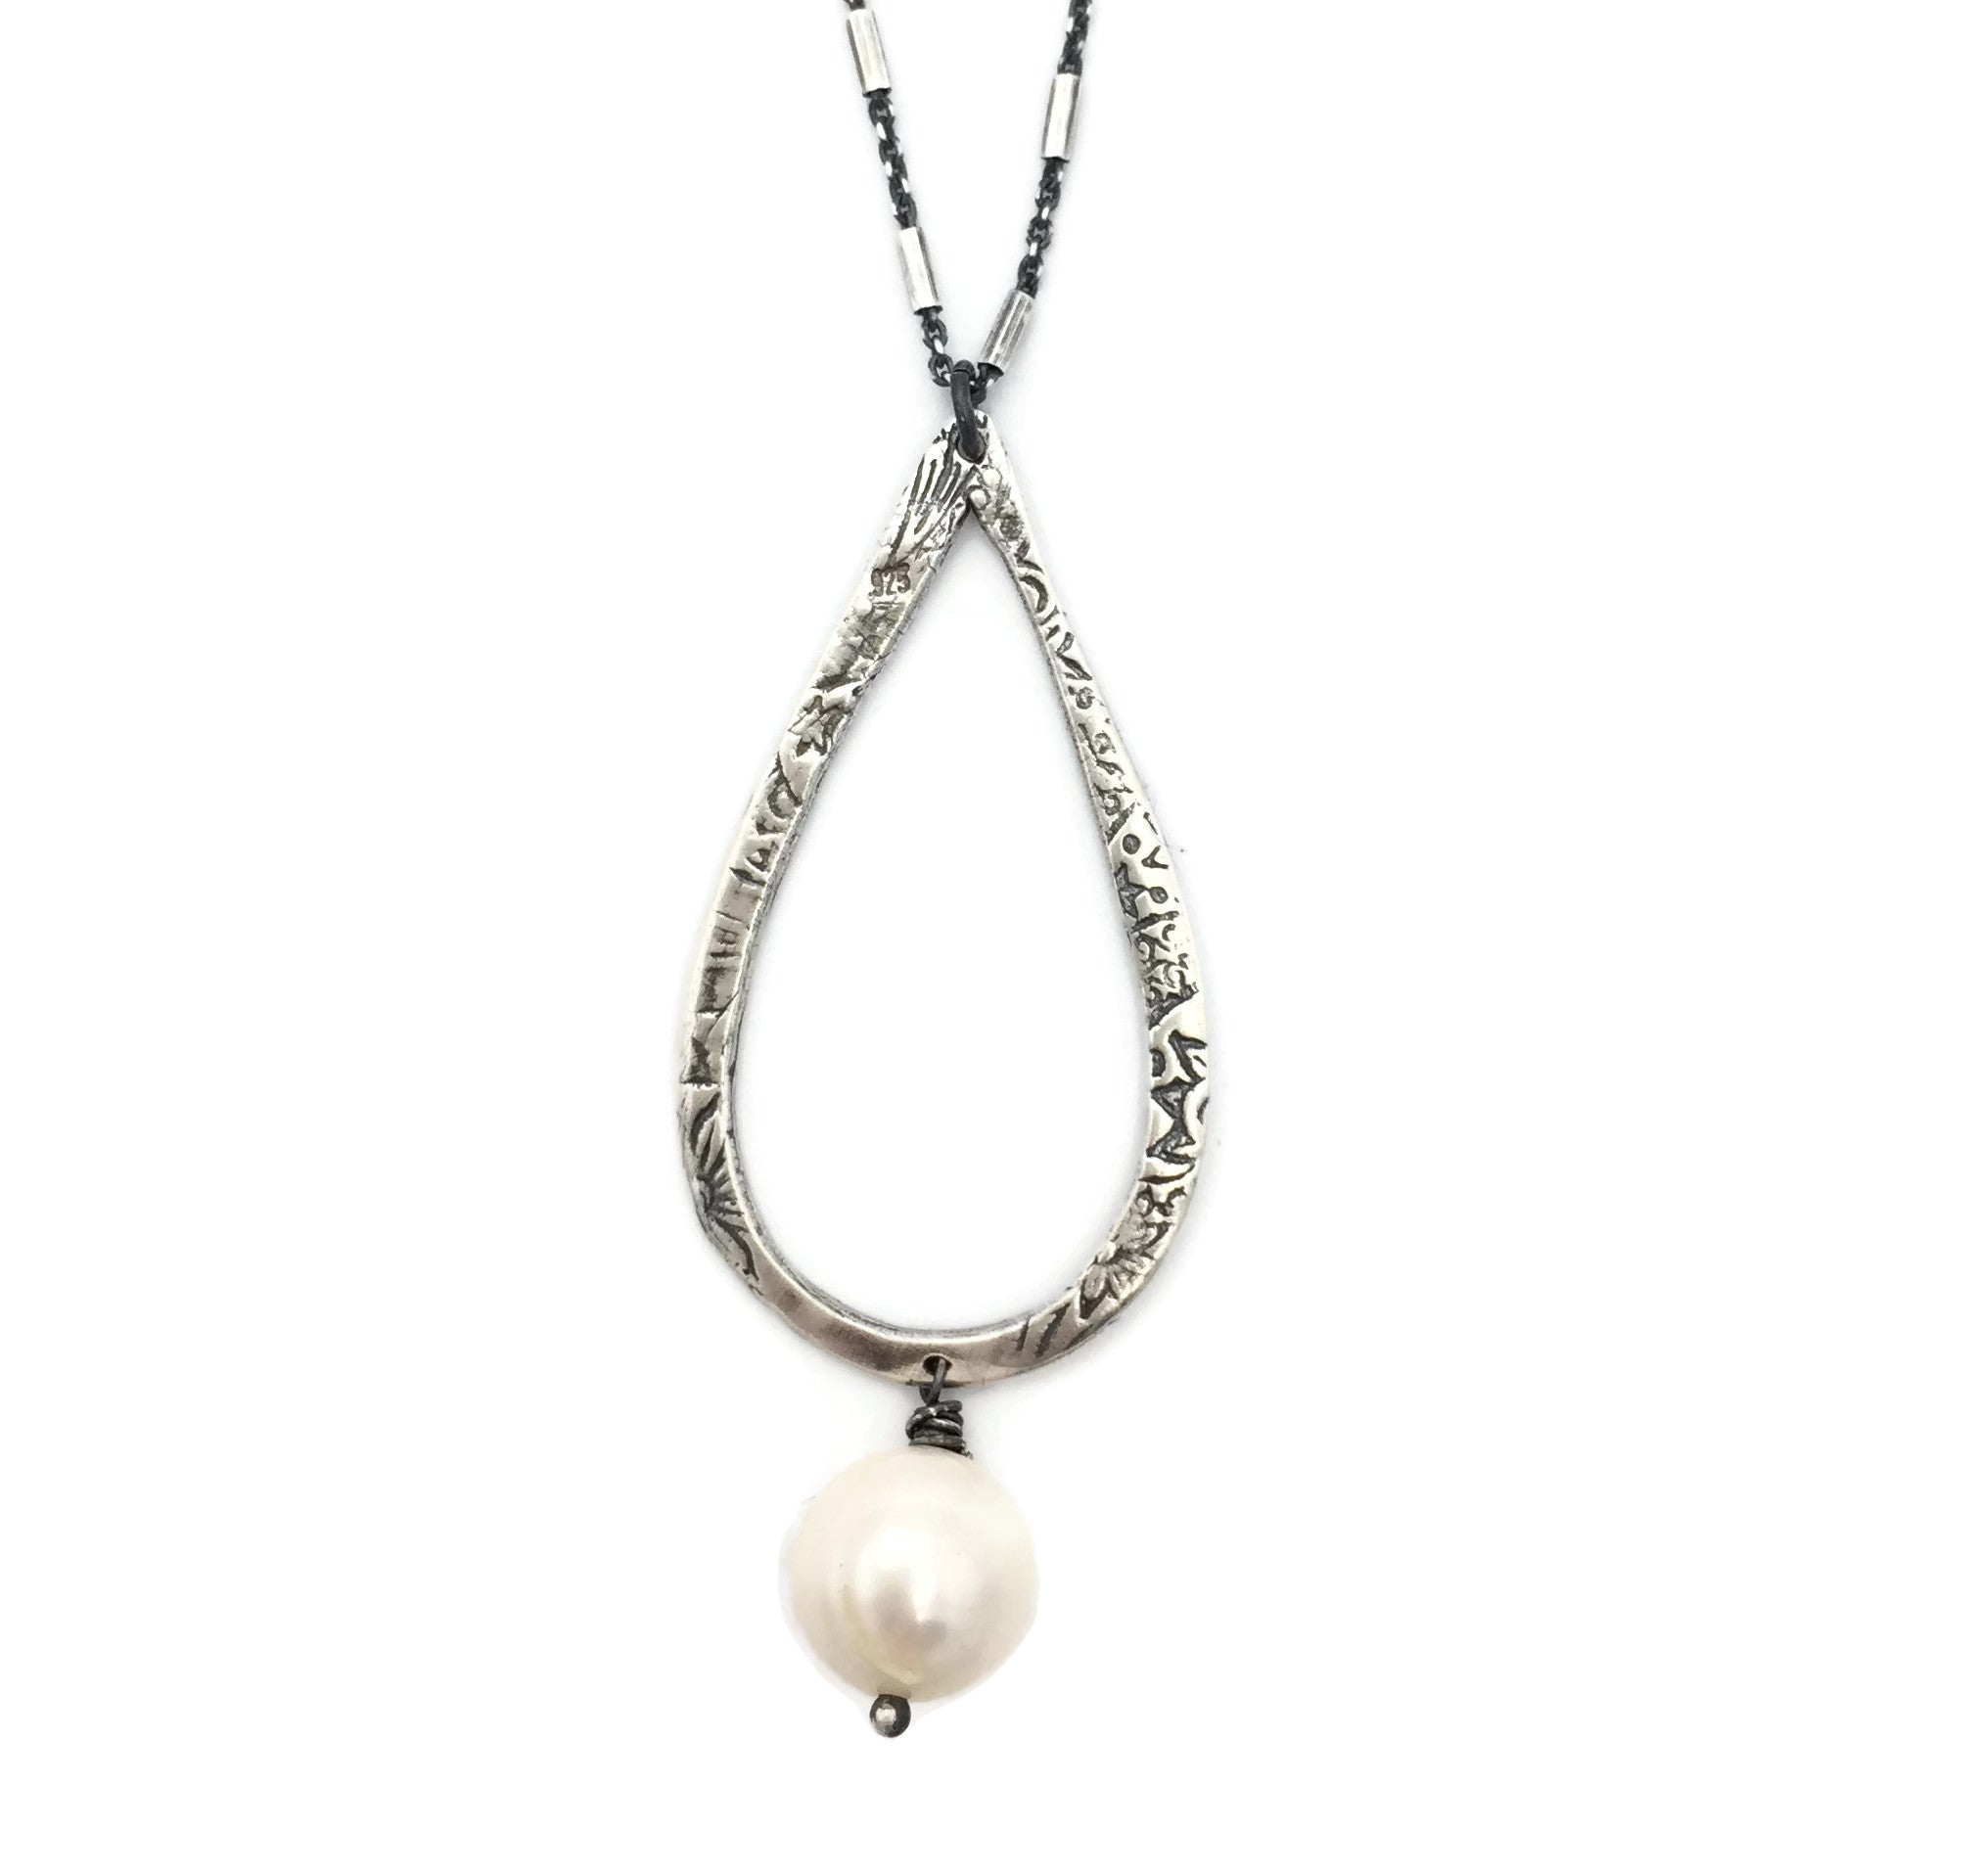 Teardrop necklace on designer chain